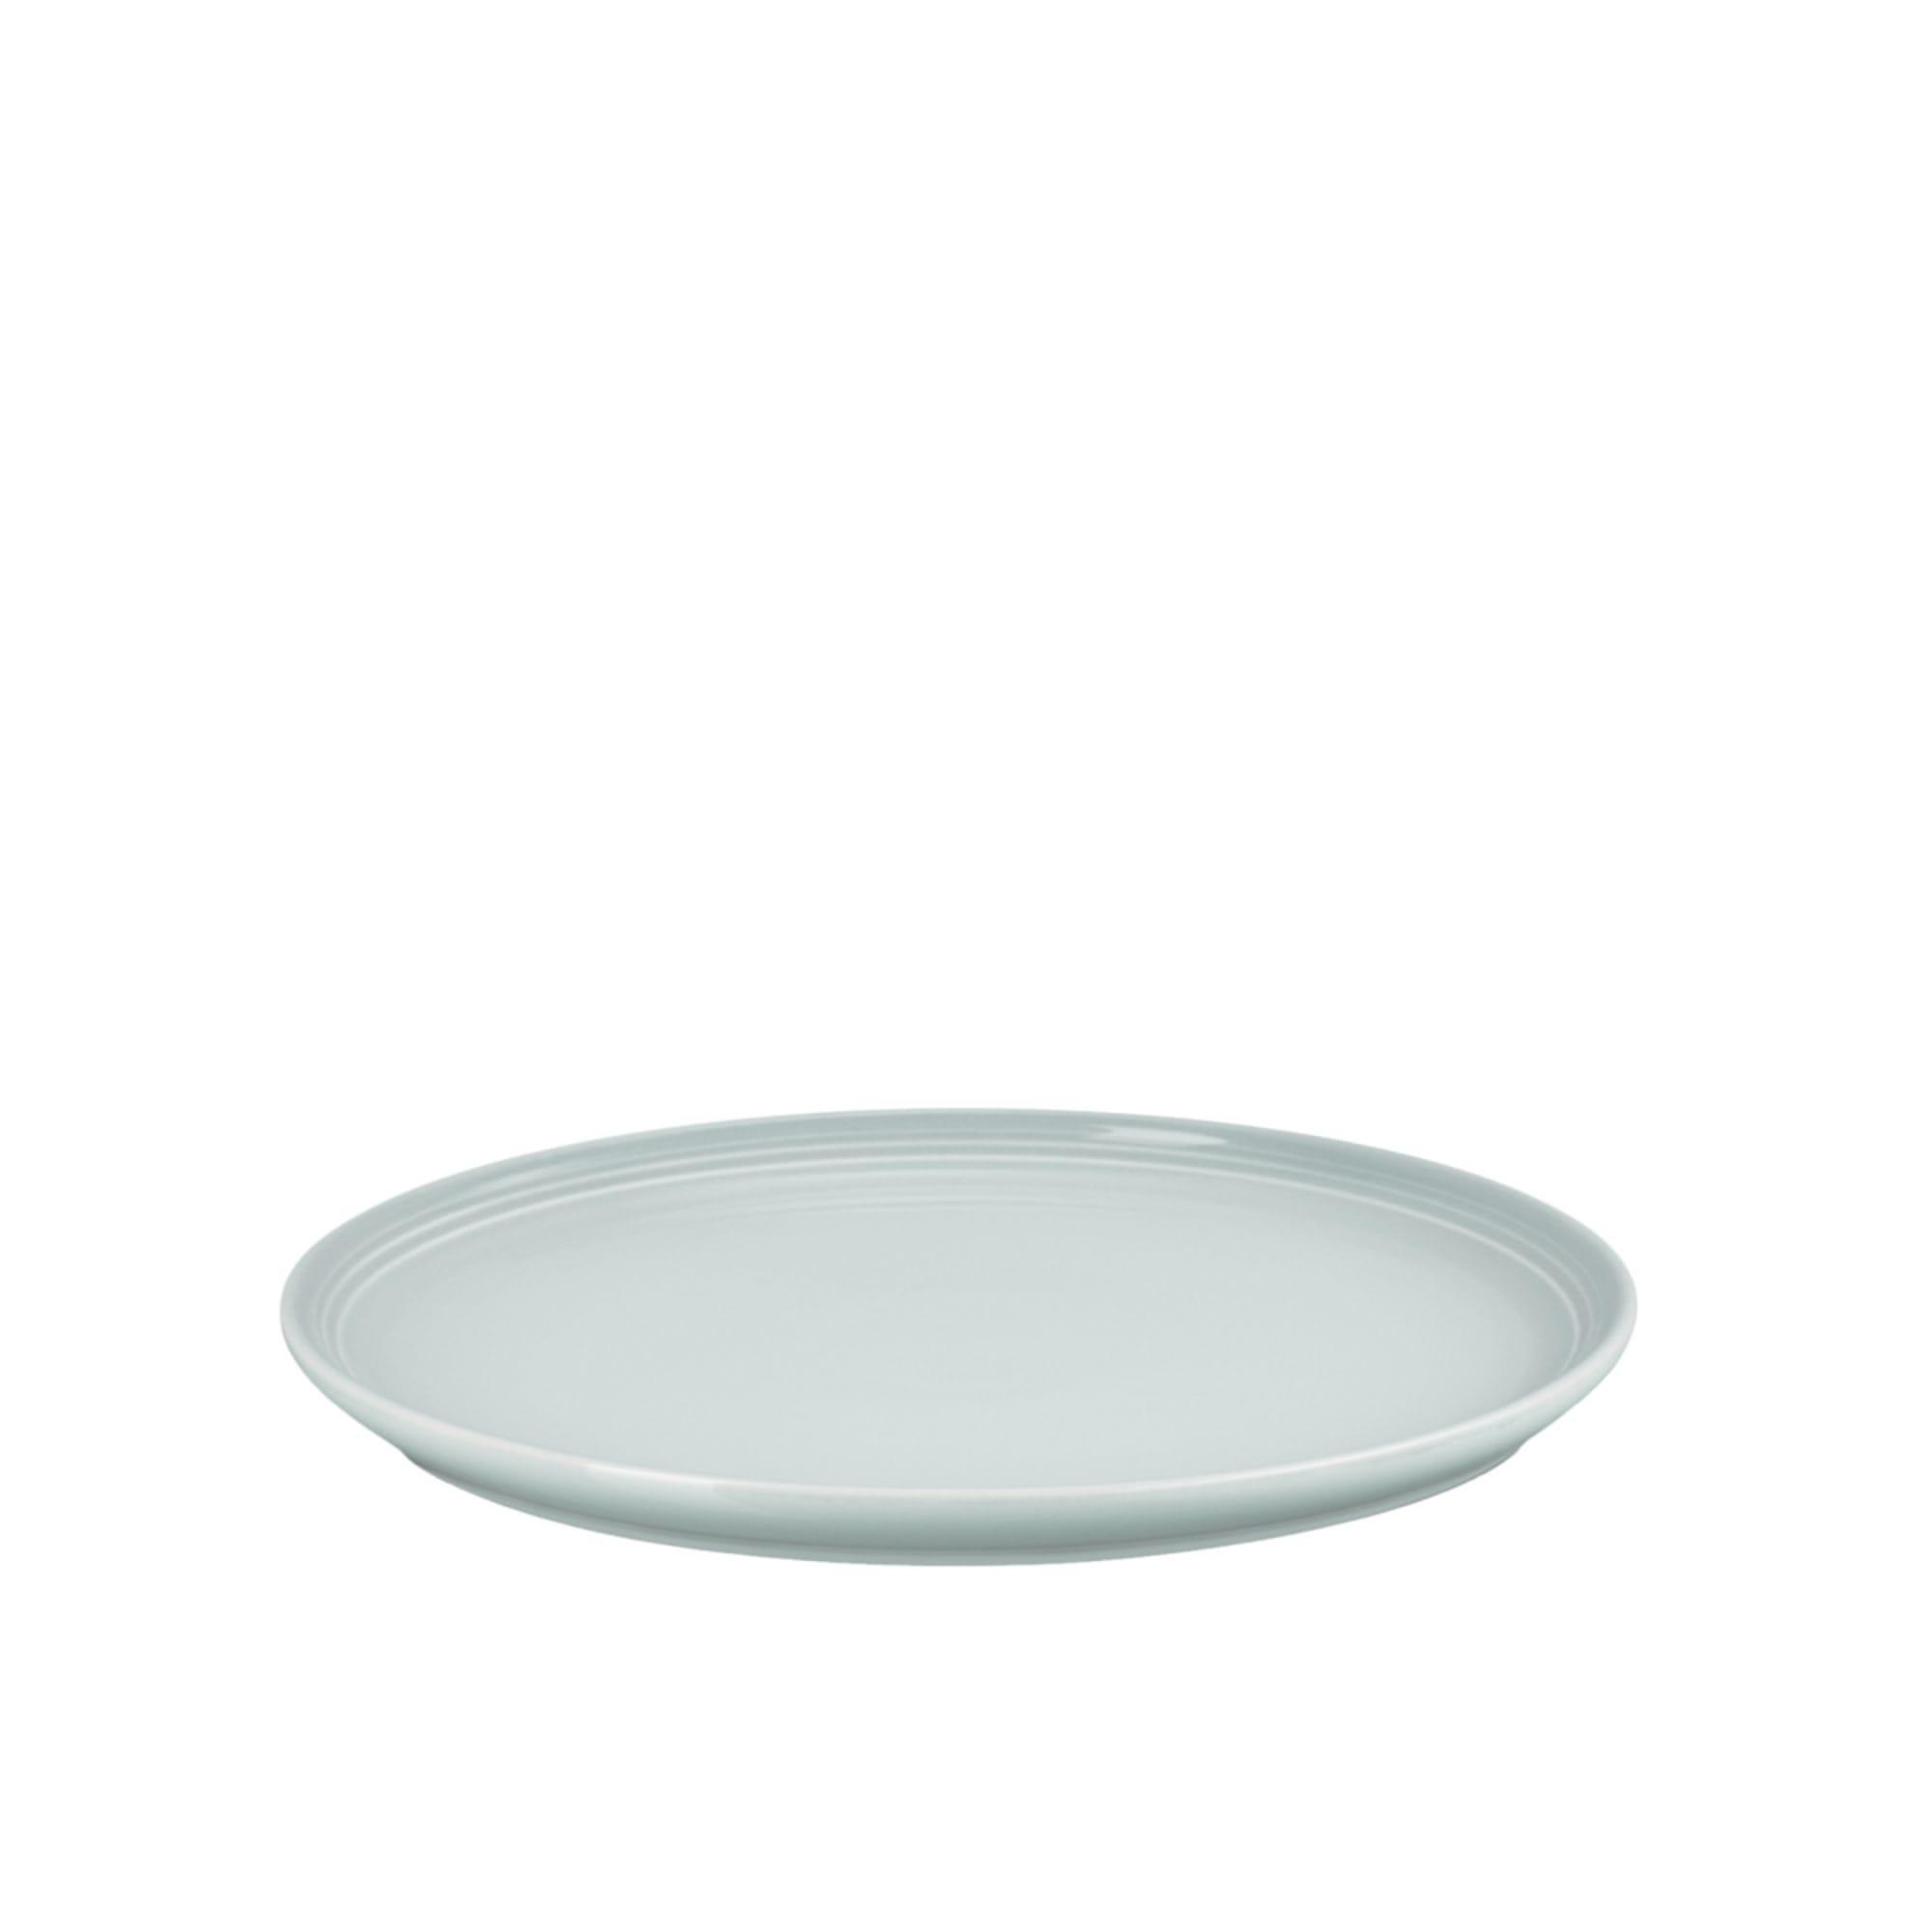 Le Creuset Stoneware Coupe Salad Plate 22cm Sea Salt Image 1